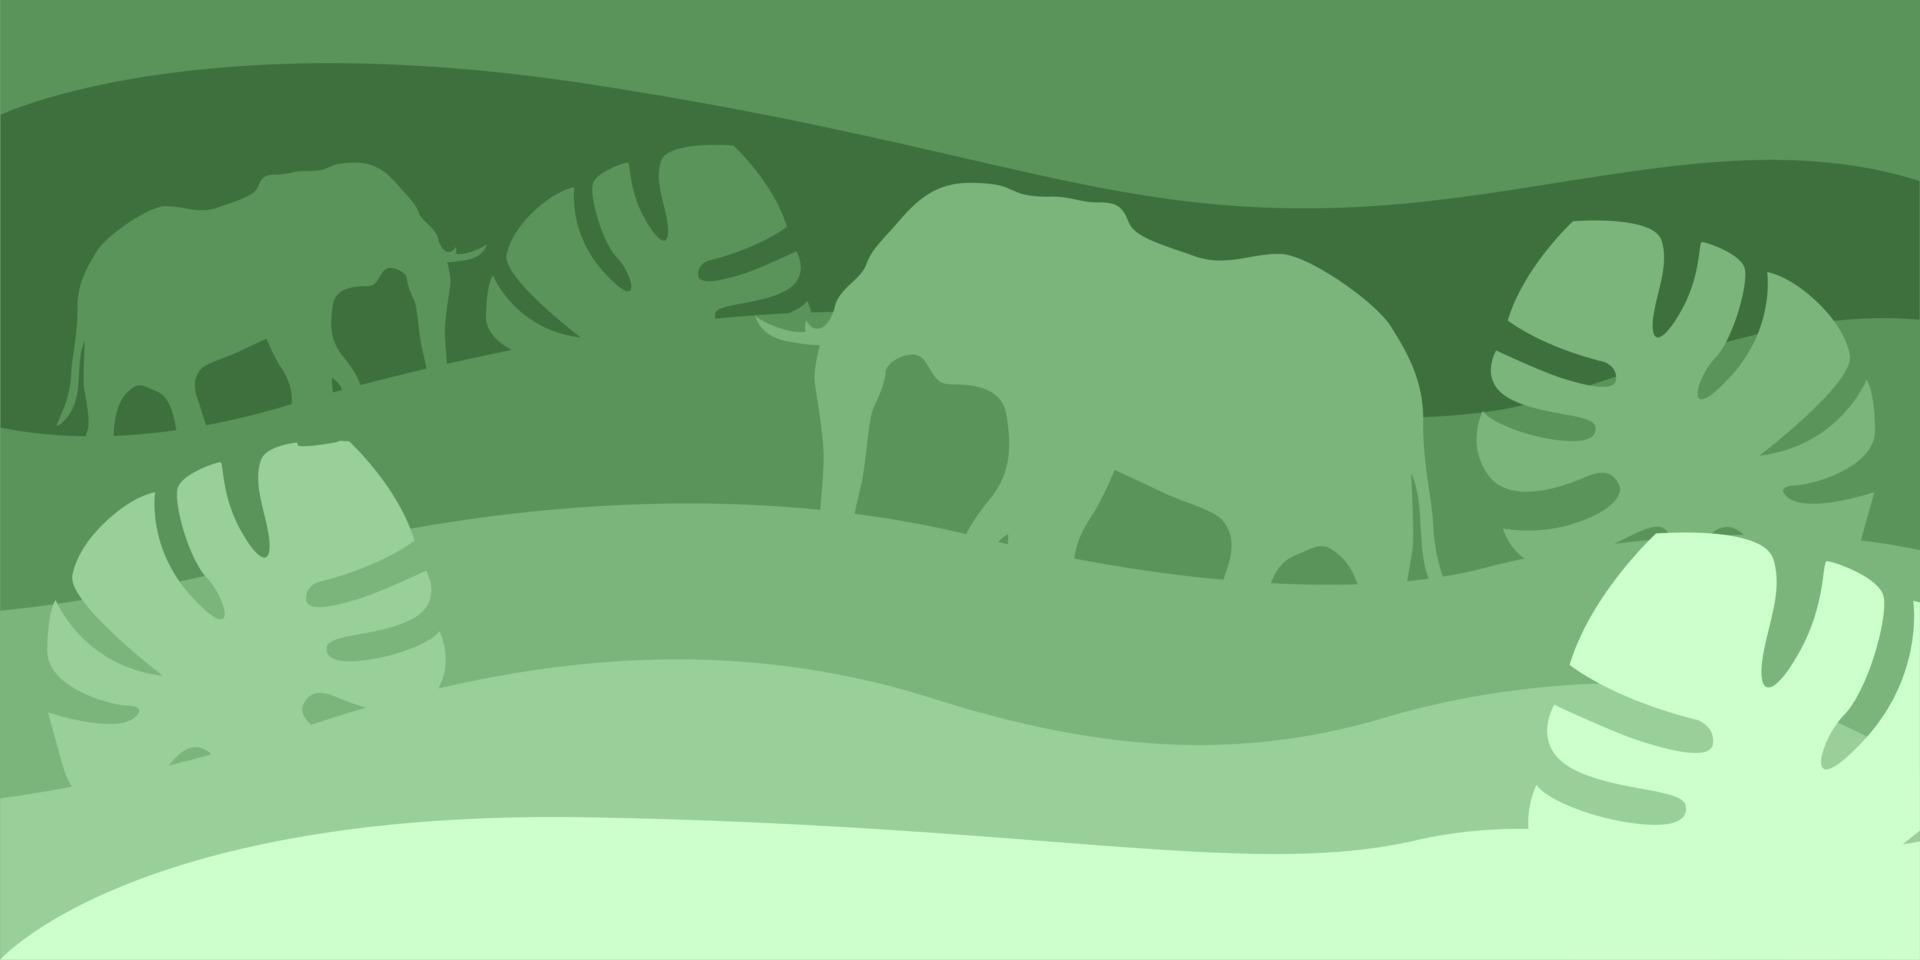 Background Vector Design, illustration vector animal in green, file format EPS.